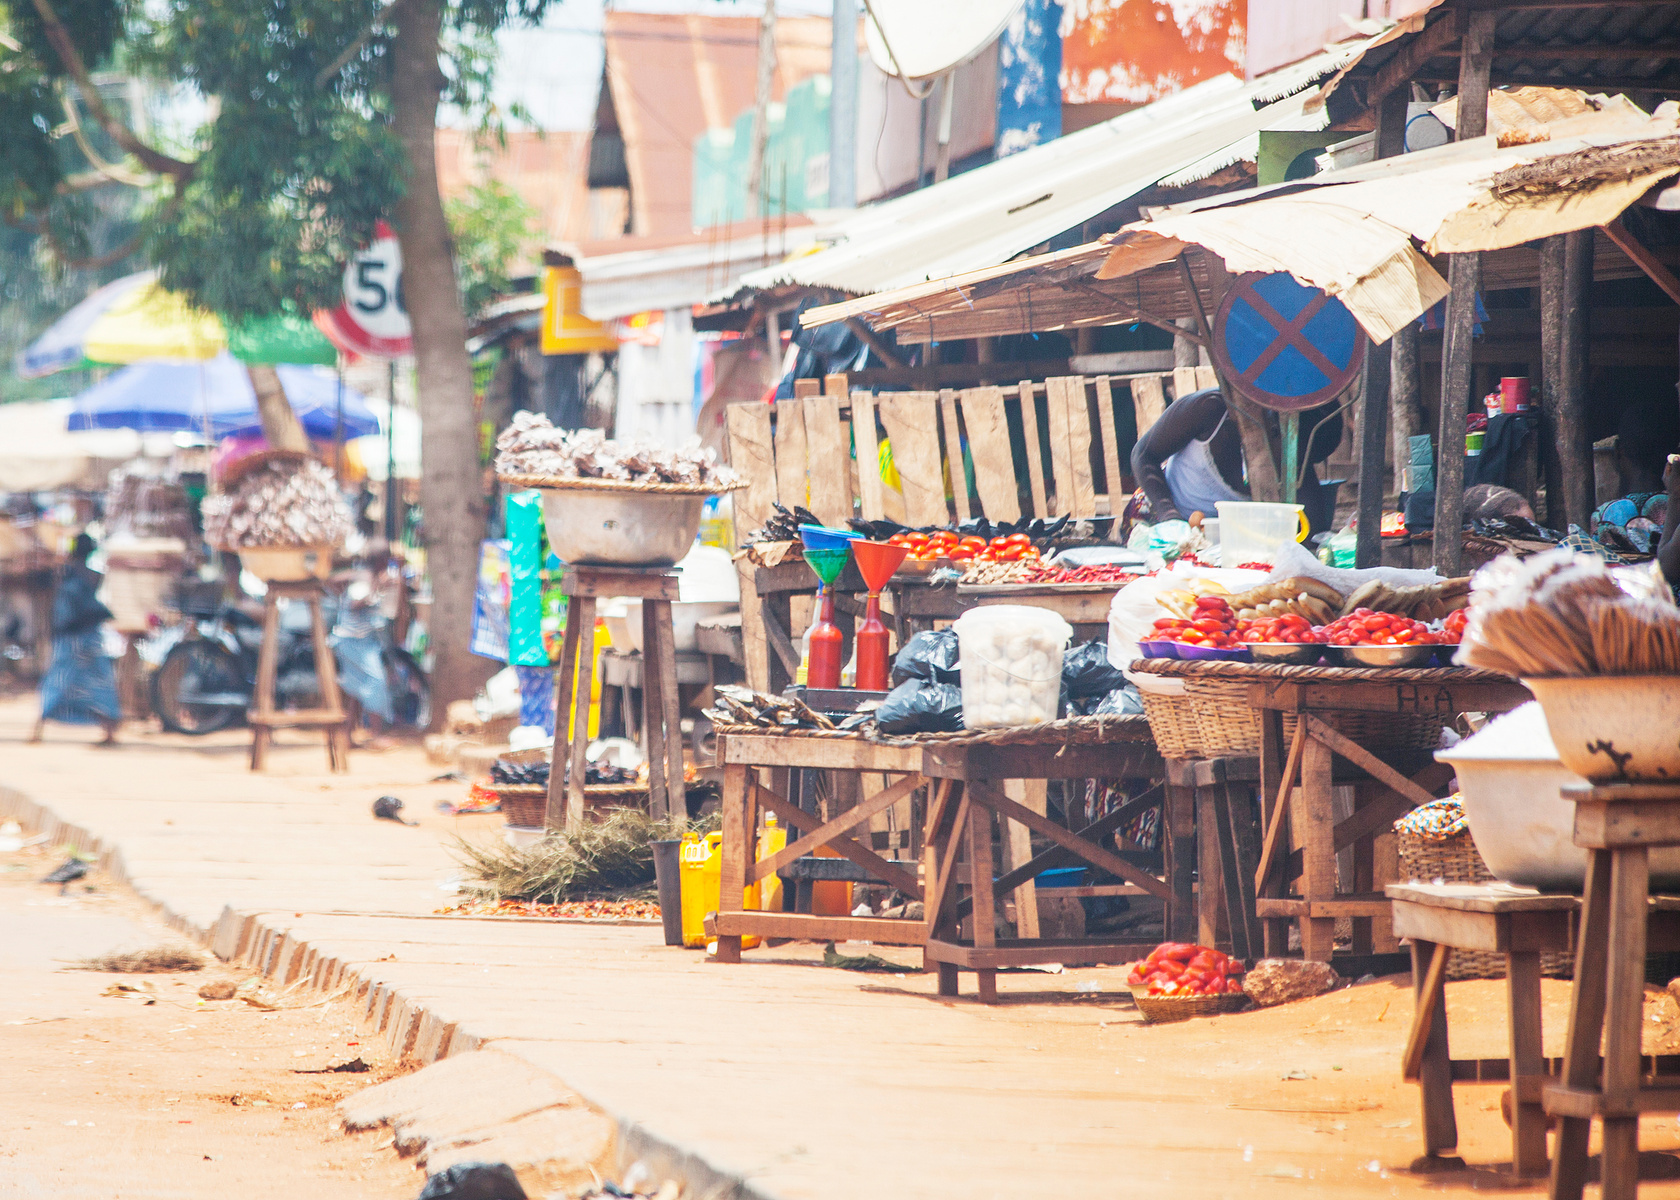 African street market scene.